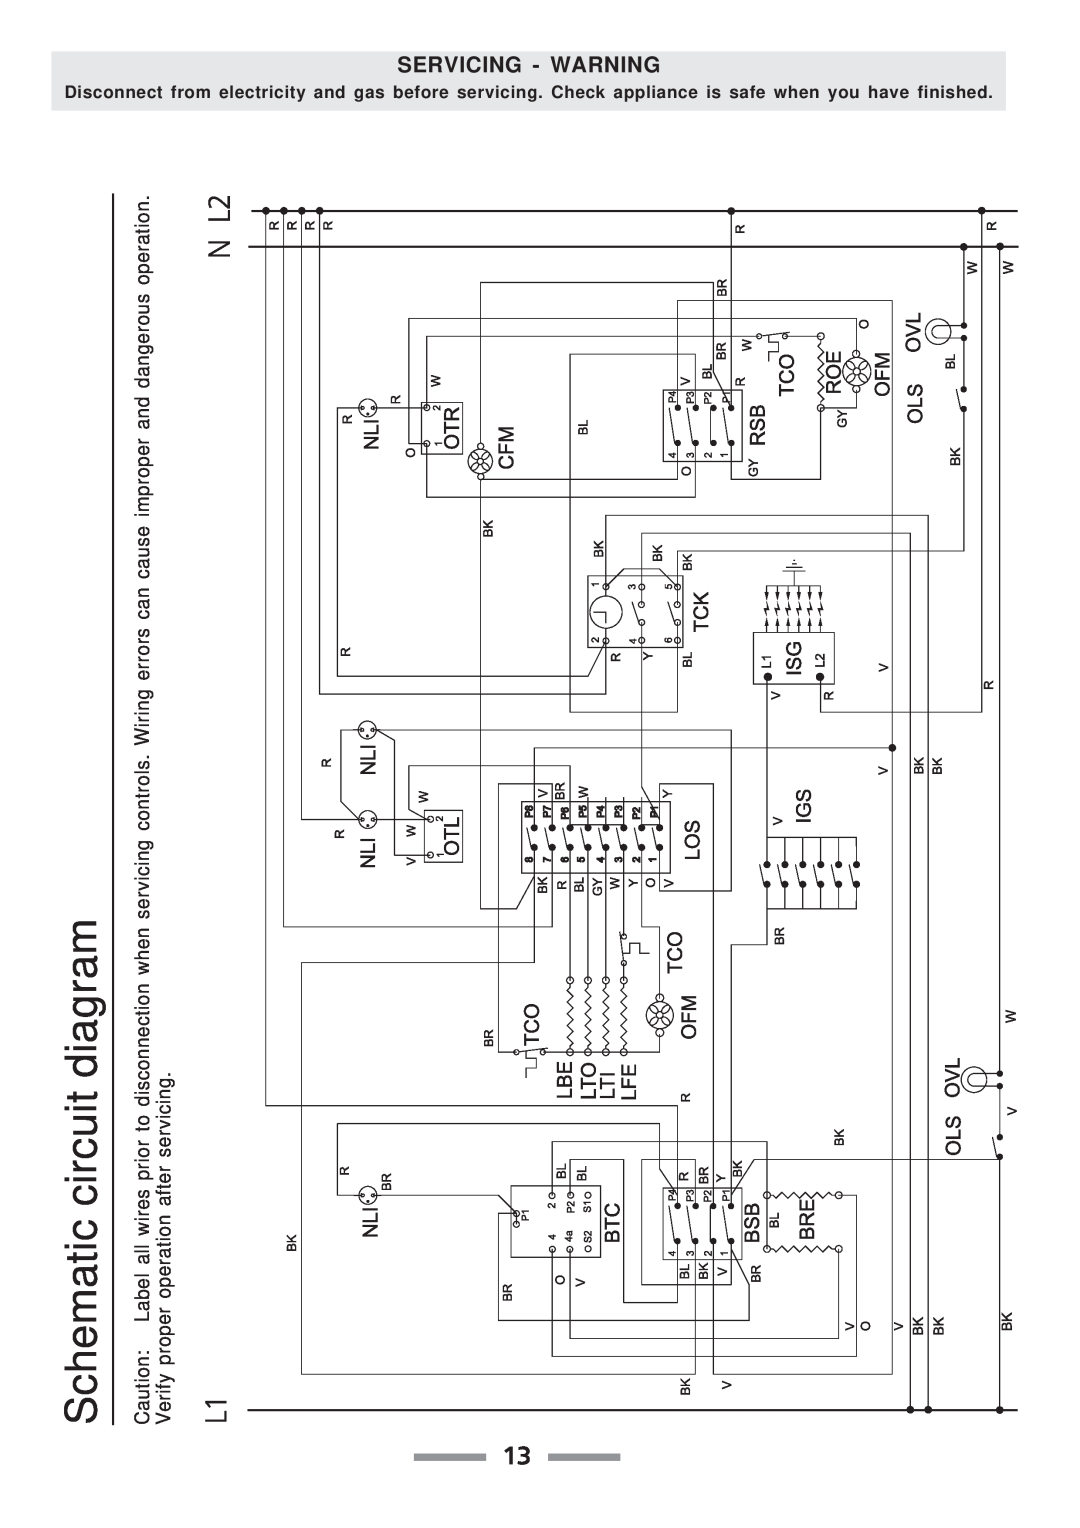 Aga Ranges F104010-01 manual Schematic circuit diagram, Servicing - Warning 